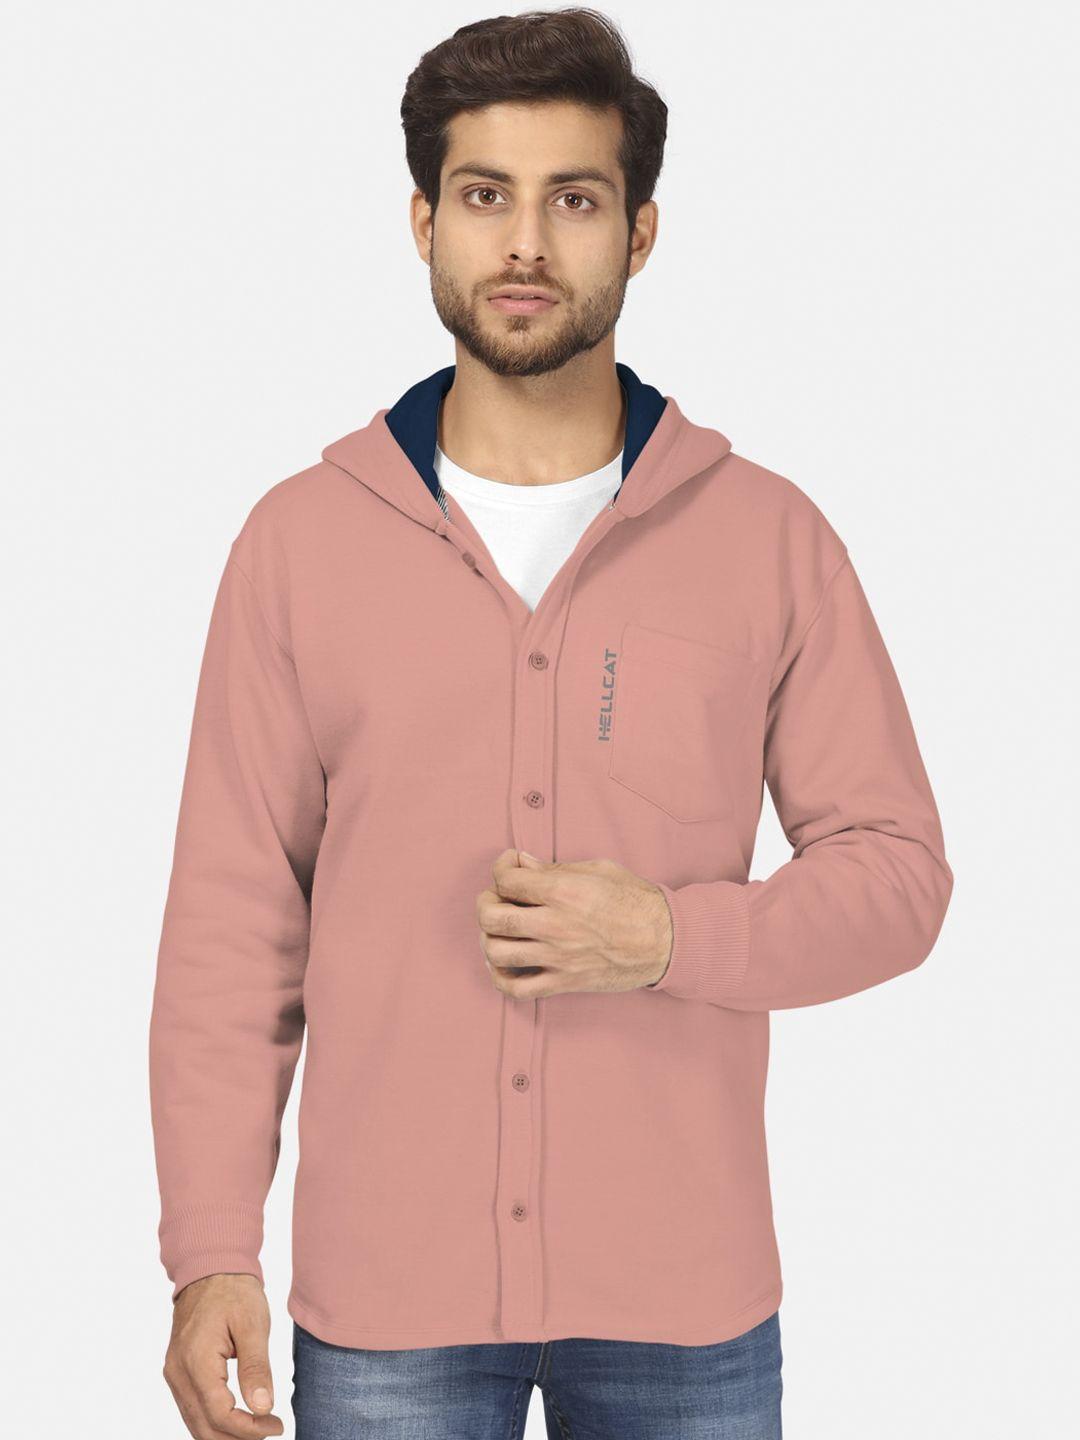 bullmer men peach-coloured hooded sweatshirt